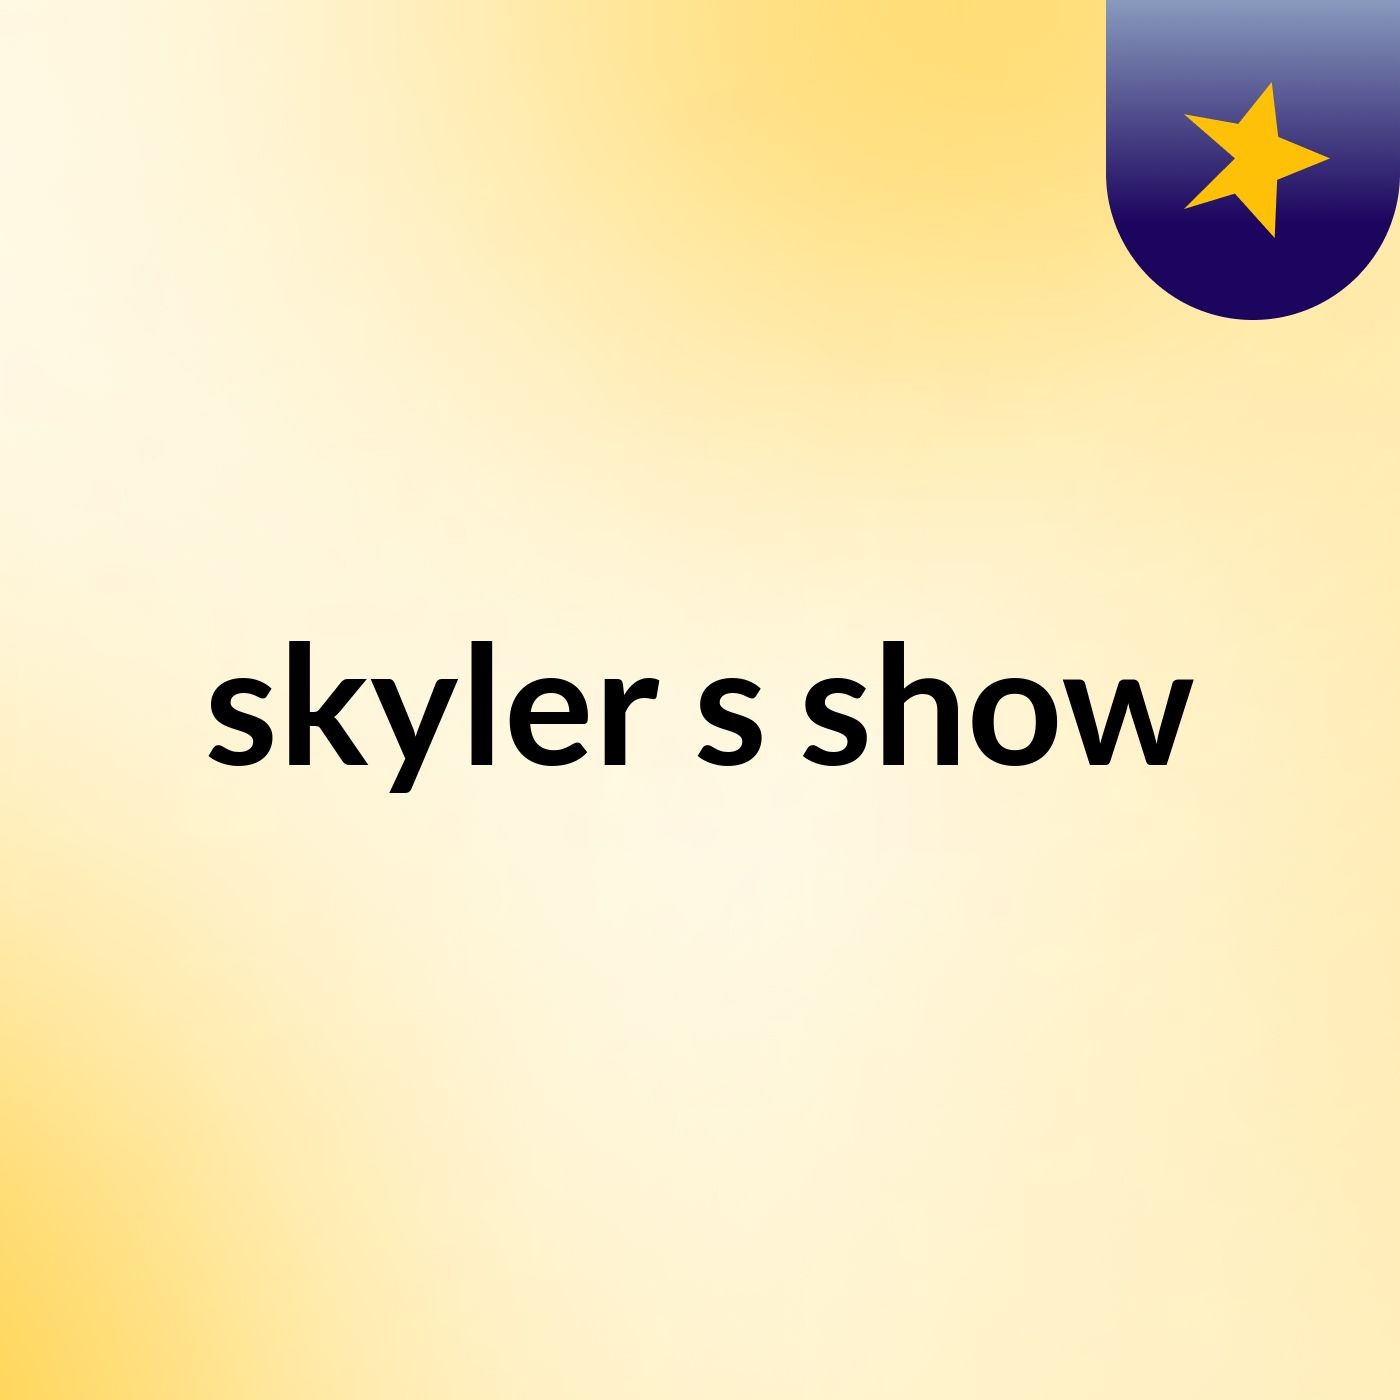 Episode 2 - skyler's show